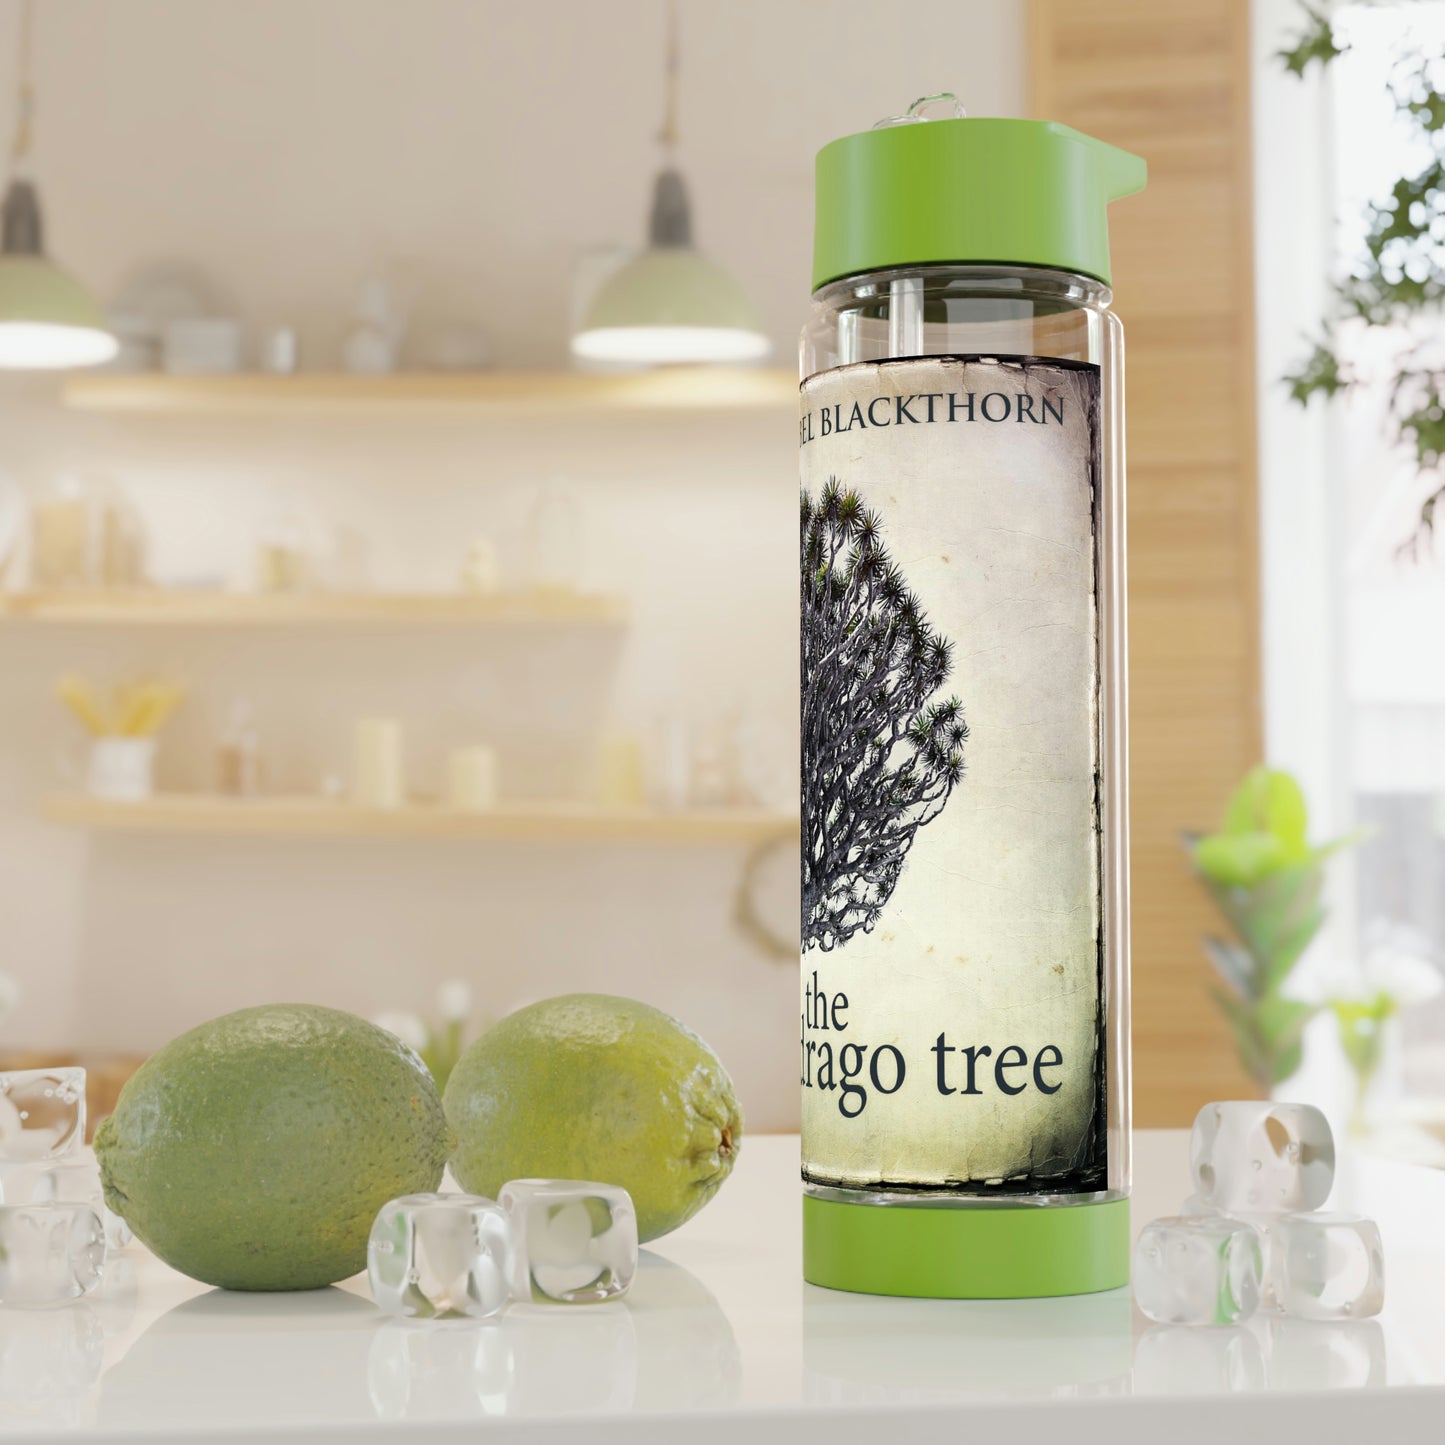 The Drago Tree - Infuser Water Bottle